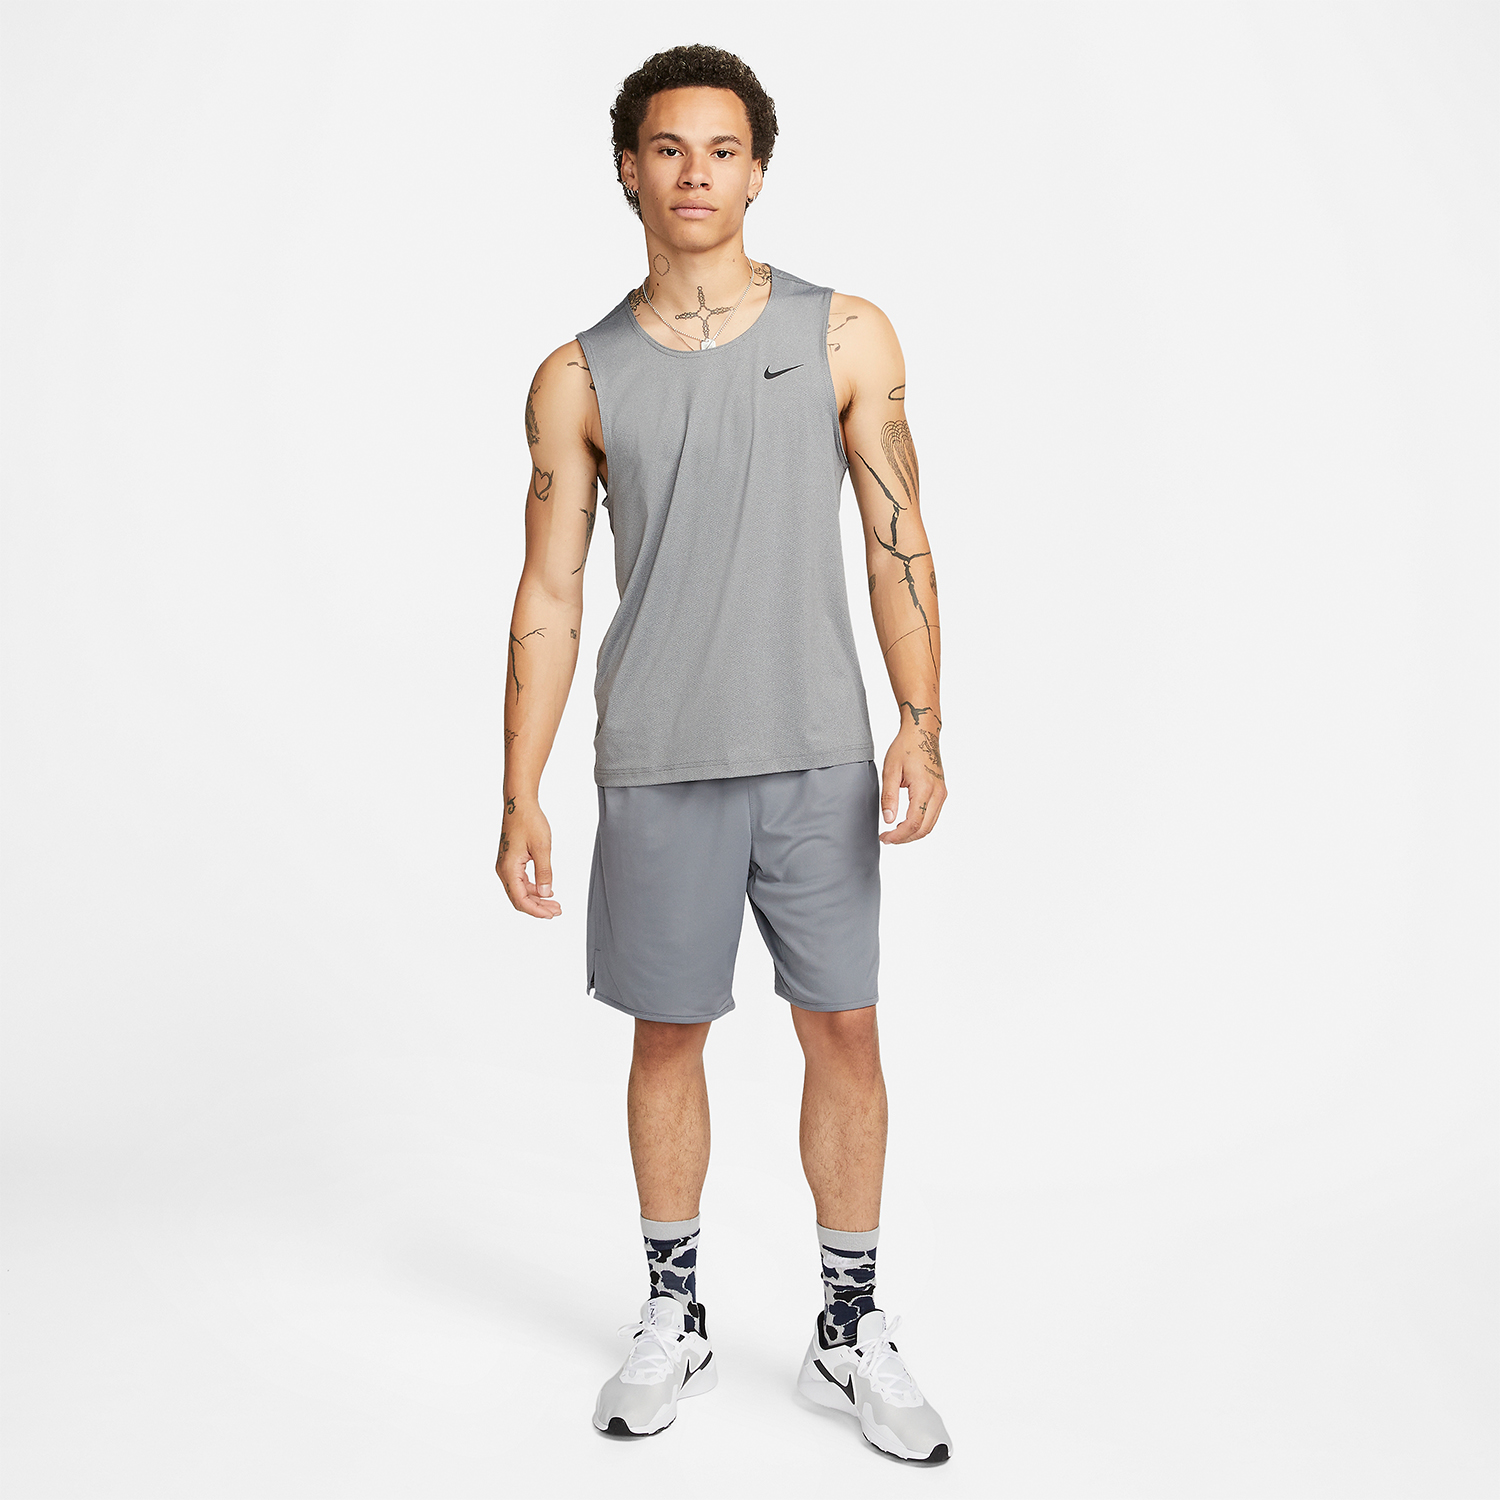 Nike Dri-FIT Ready Men's Training Tank - Smoke Grey/Heather